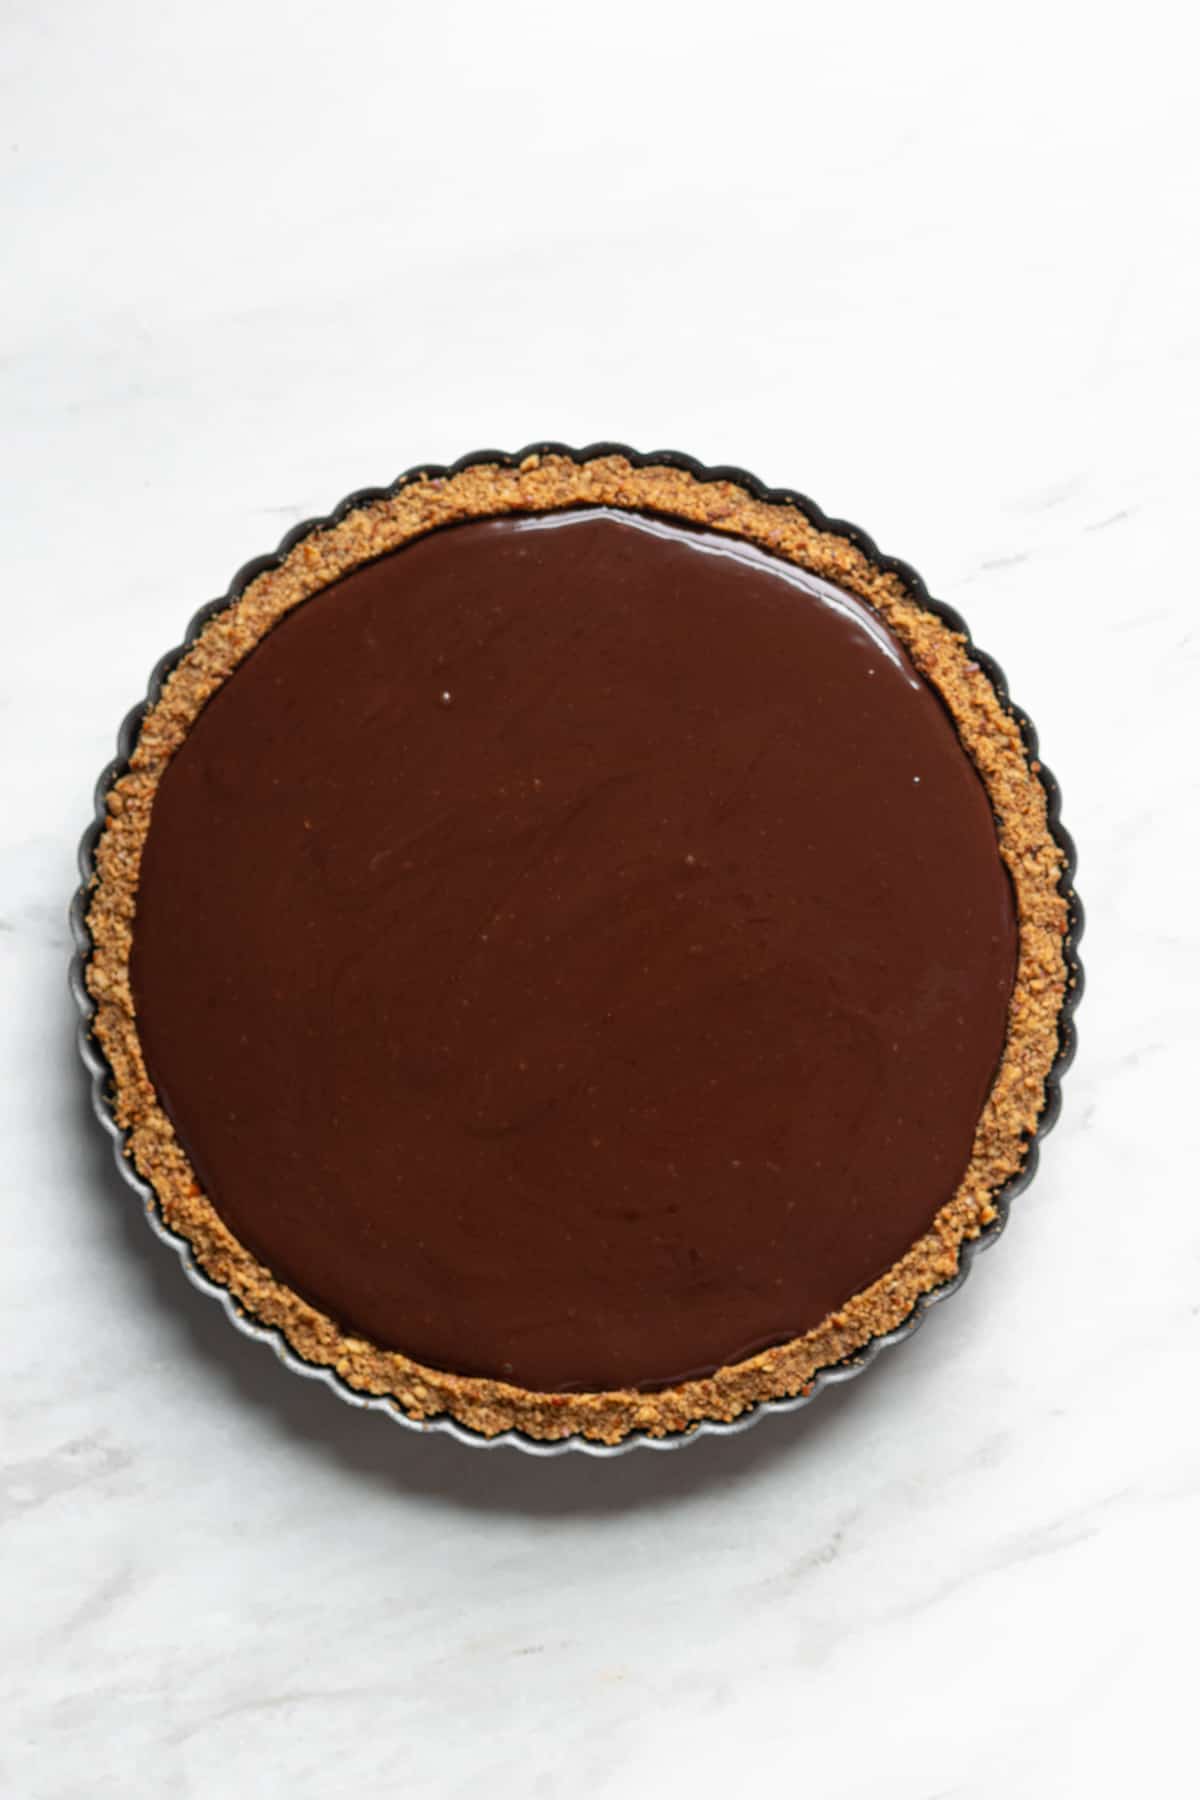 Overhead shot of chocolate ganache set on top of the pie.